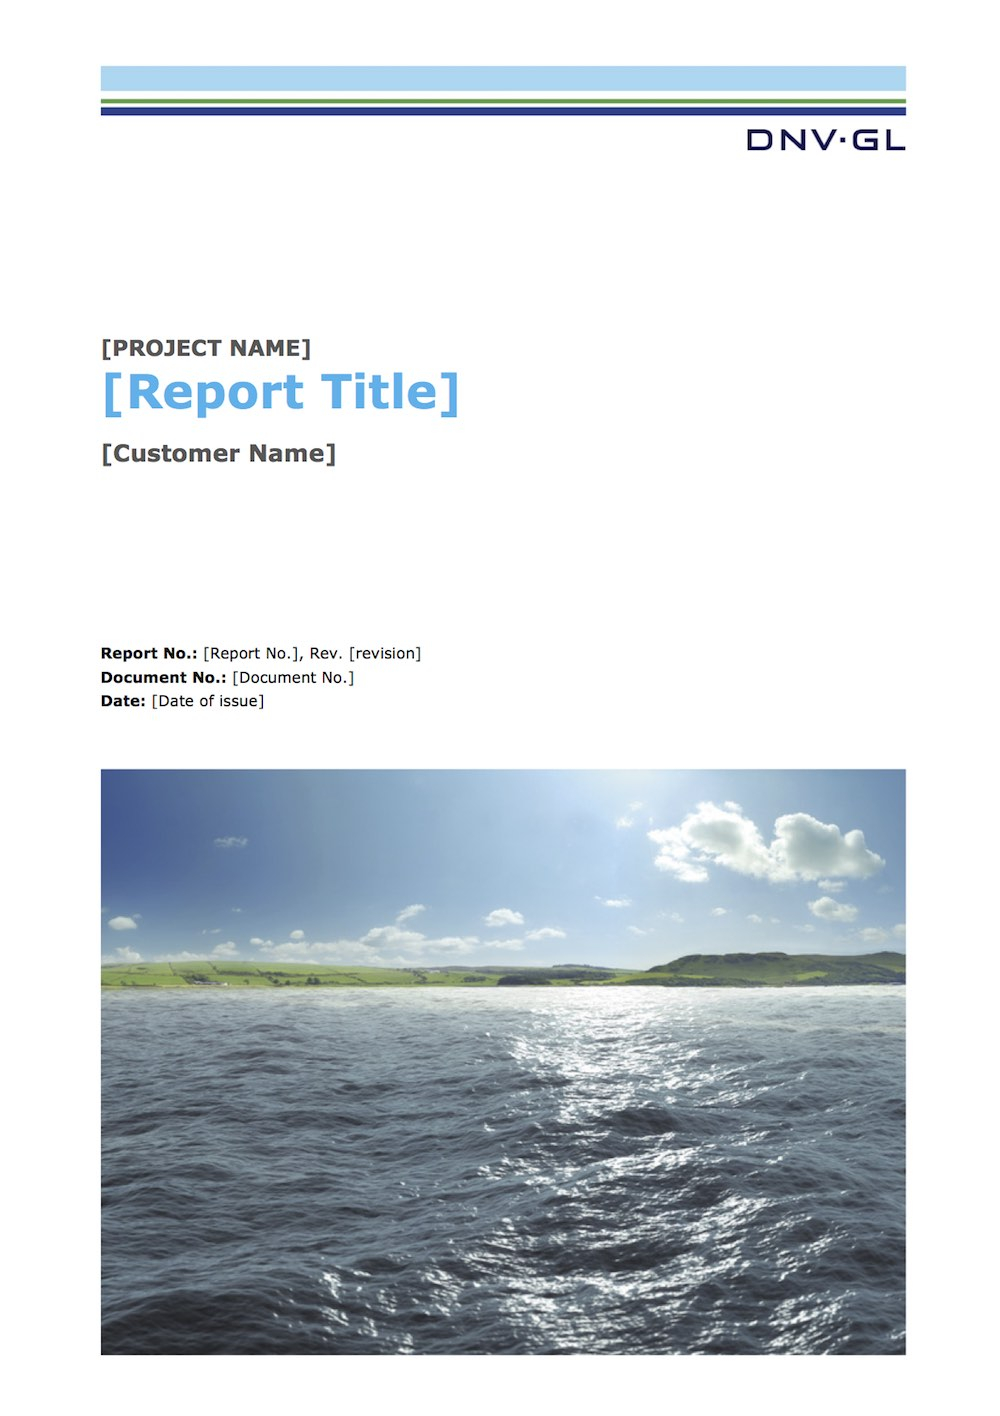 LaTeX Typesetting - Showcase of Previous Work Regarding Project Report Template Latex